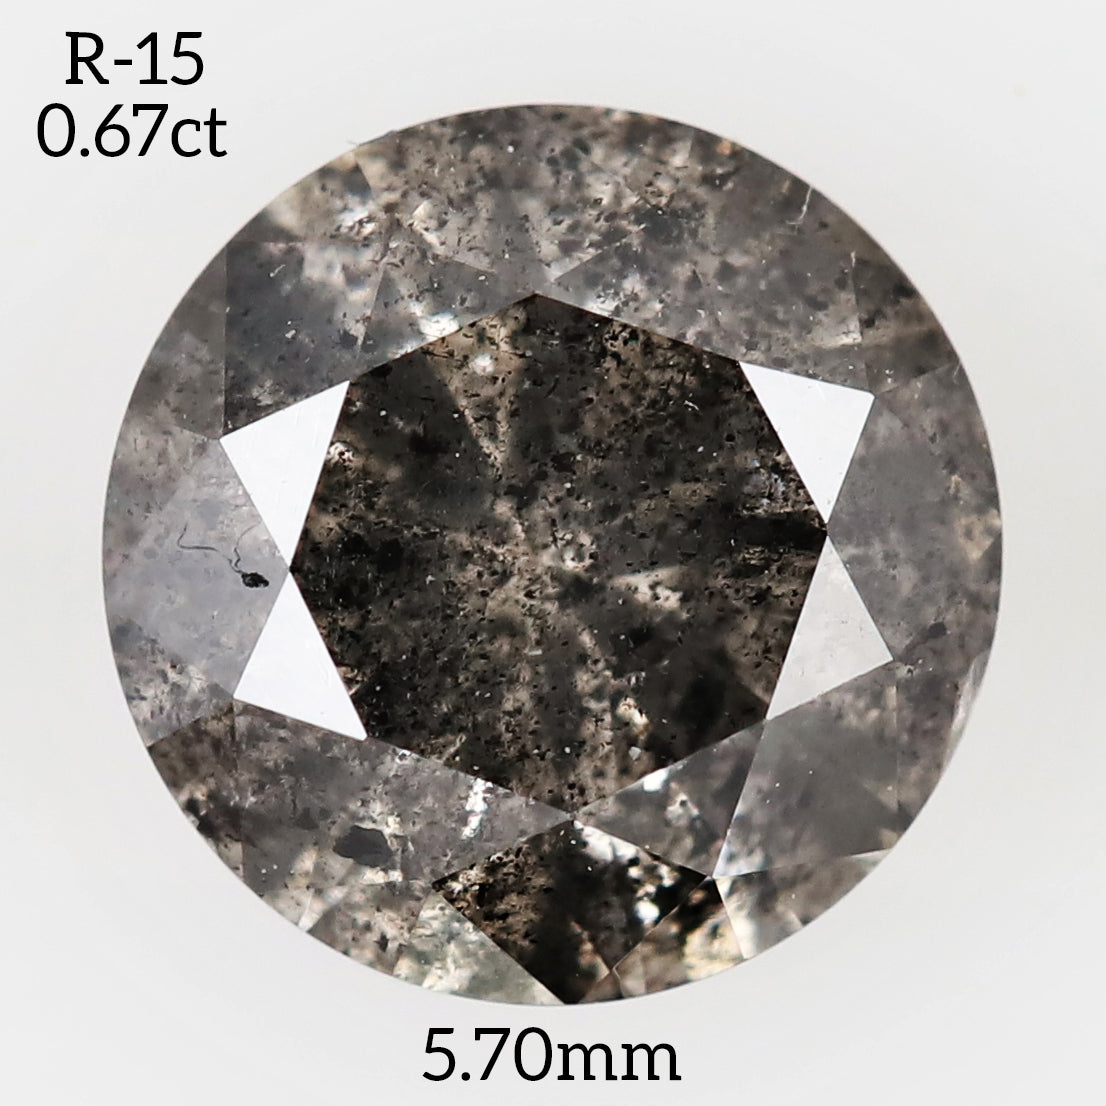 R15 - Salt and pepper round diamond